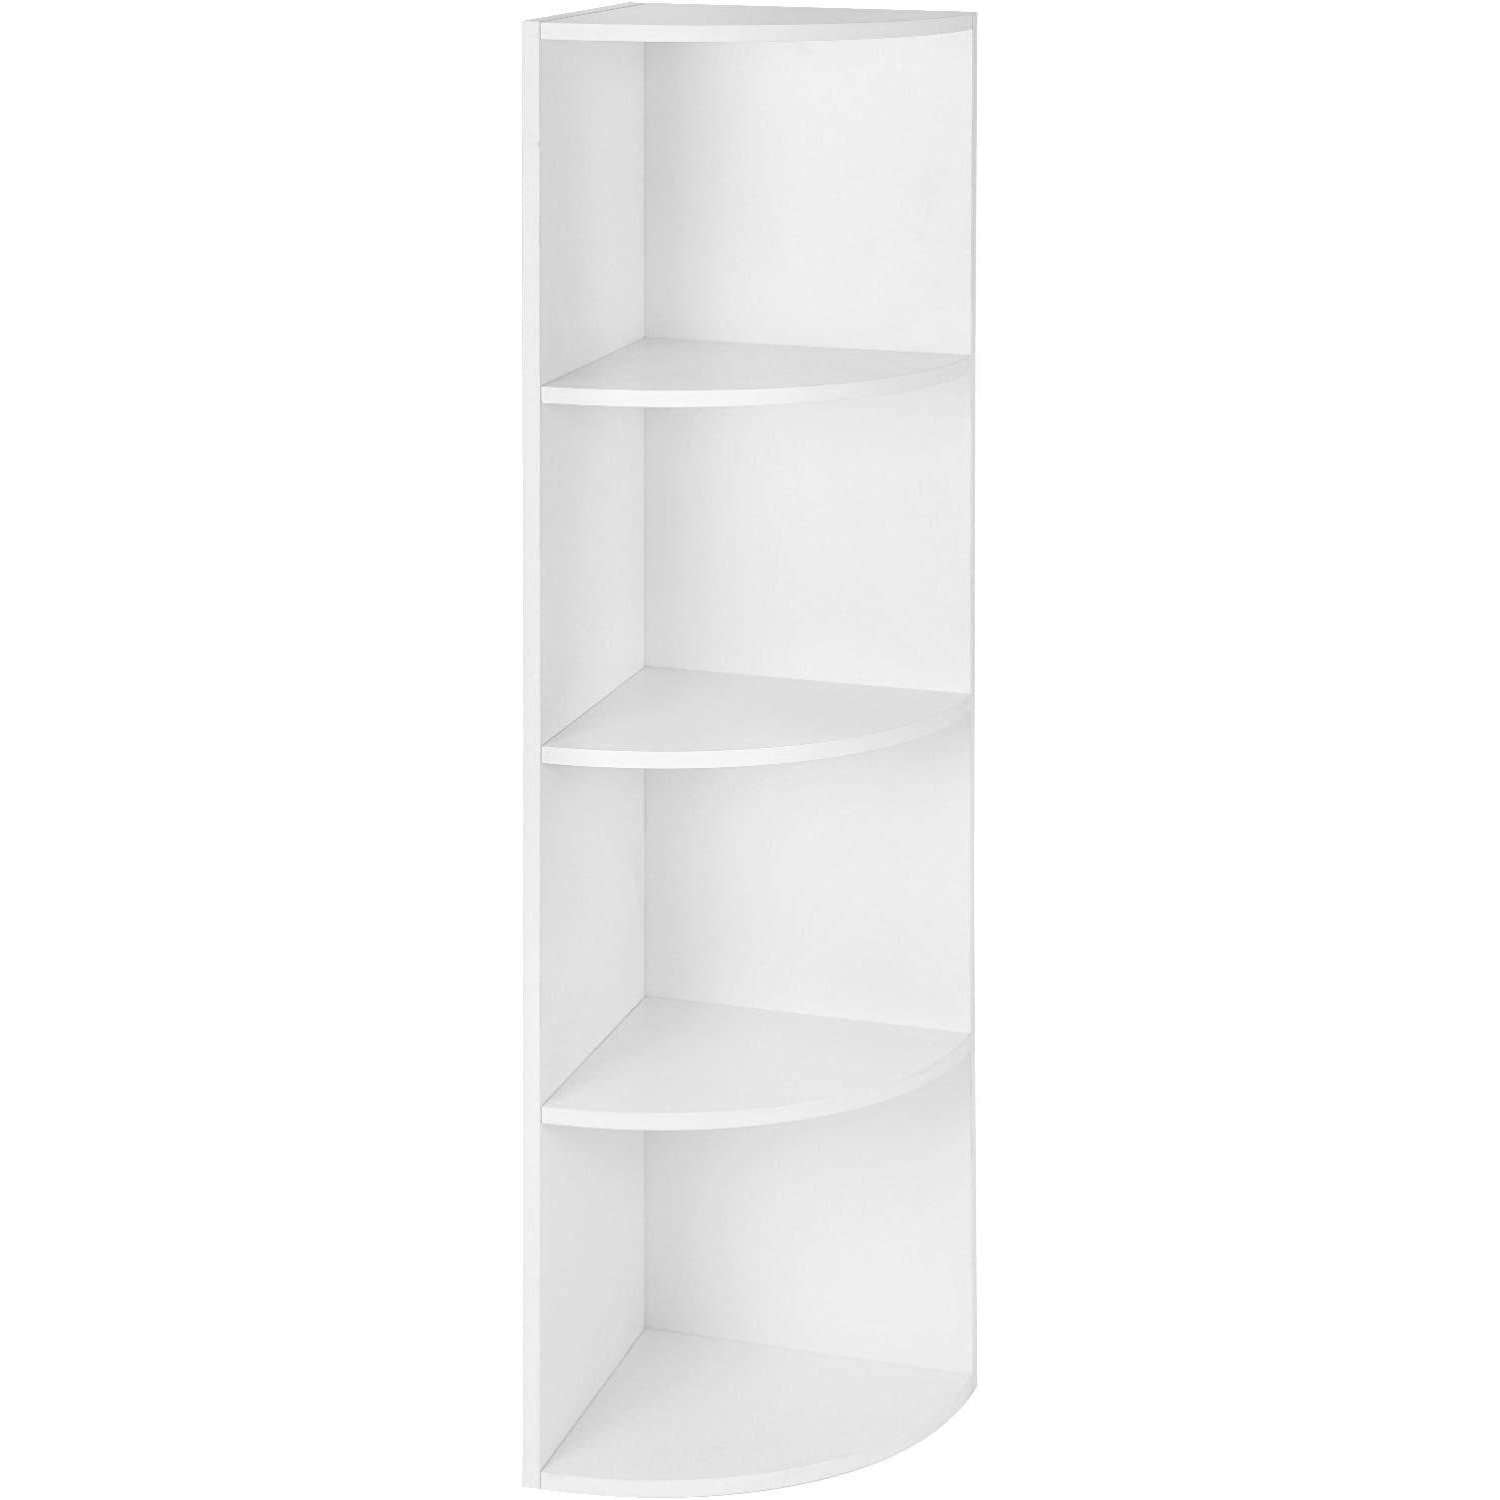 Nancy's Wall Cabinet - Corner Cabinet - Storage Cabinet - Bookcase